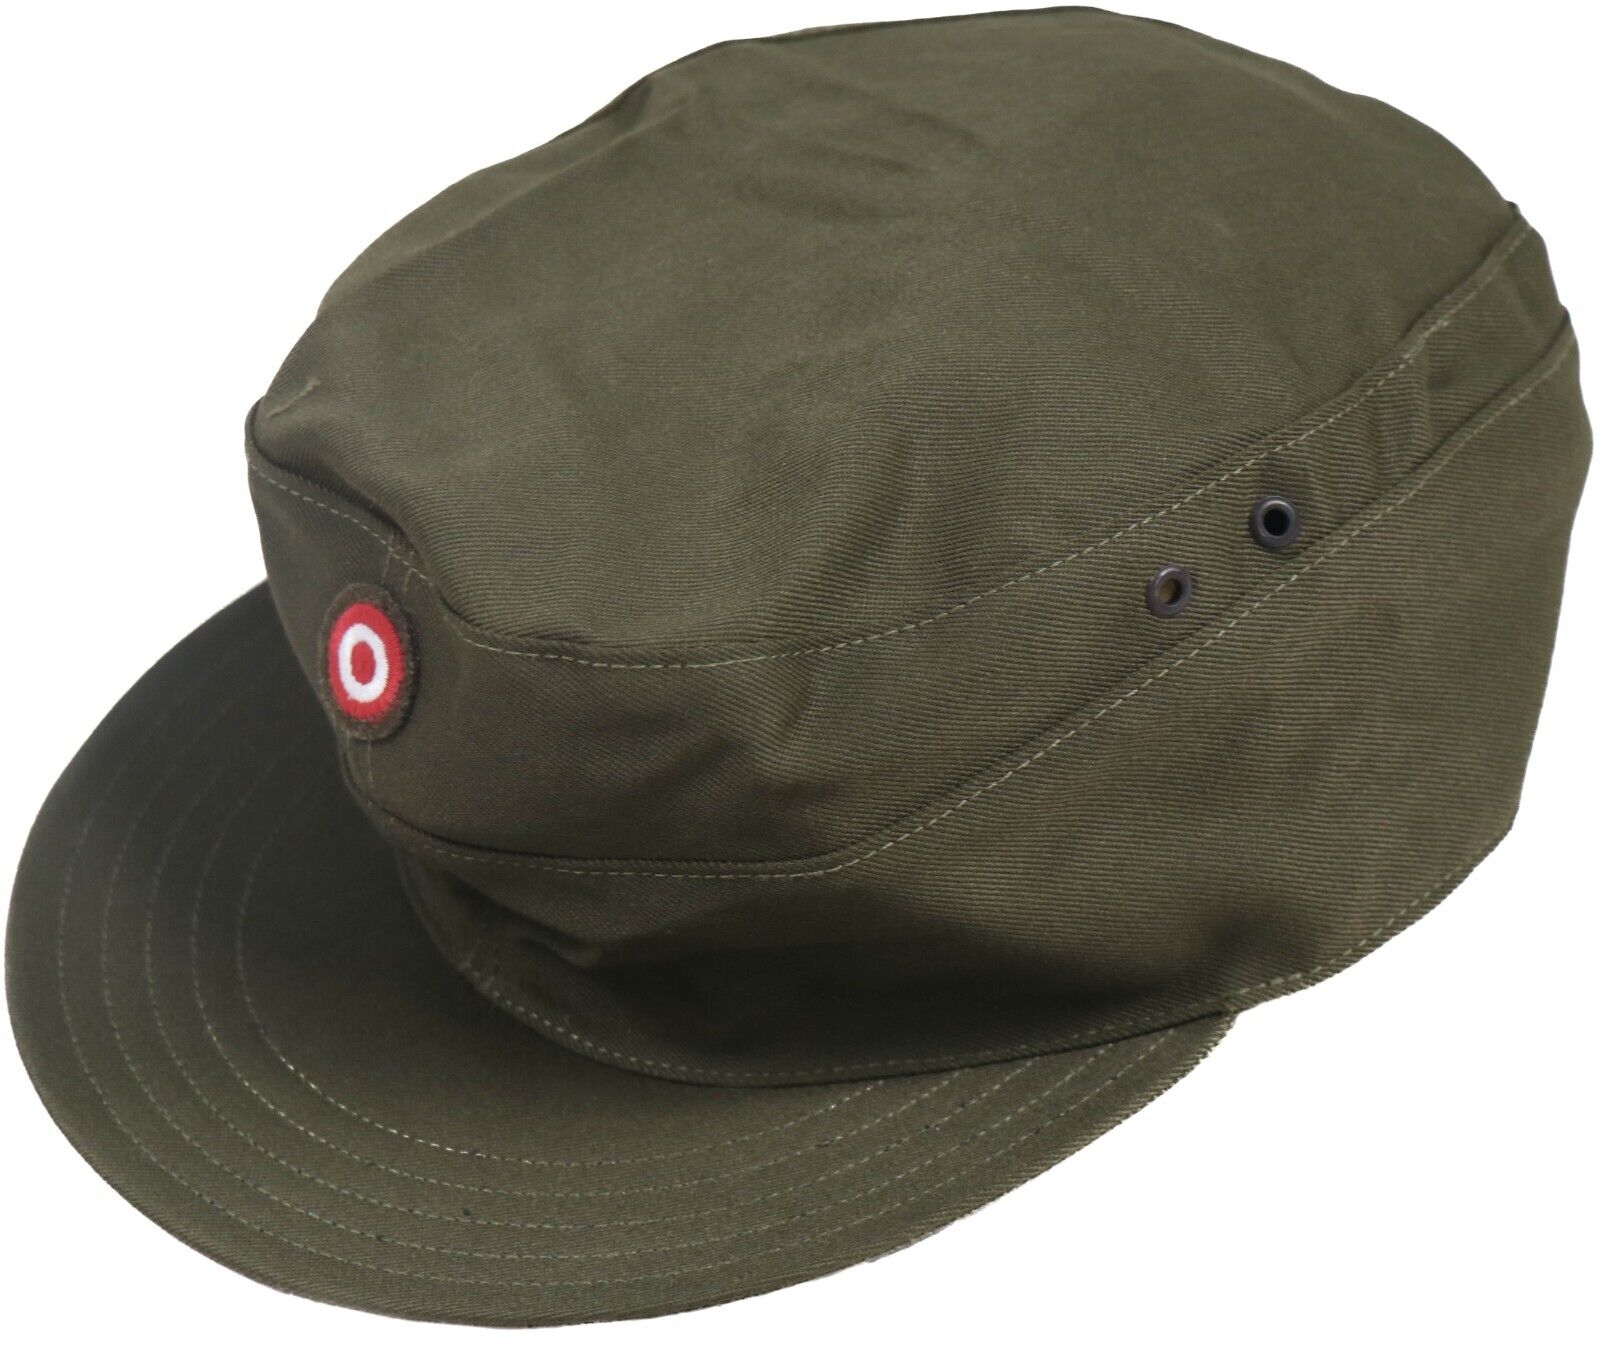 Size 60 - Austrian Army Olive Drab Field Cap Original Military Surplus Army Hat